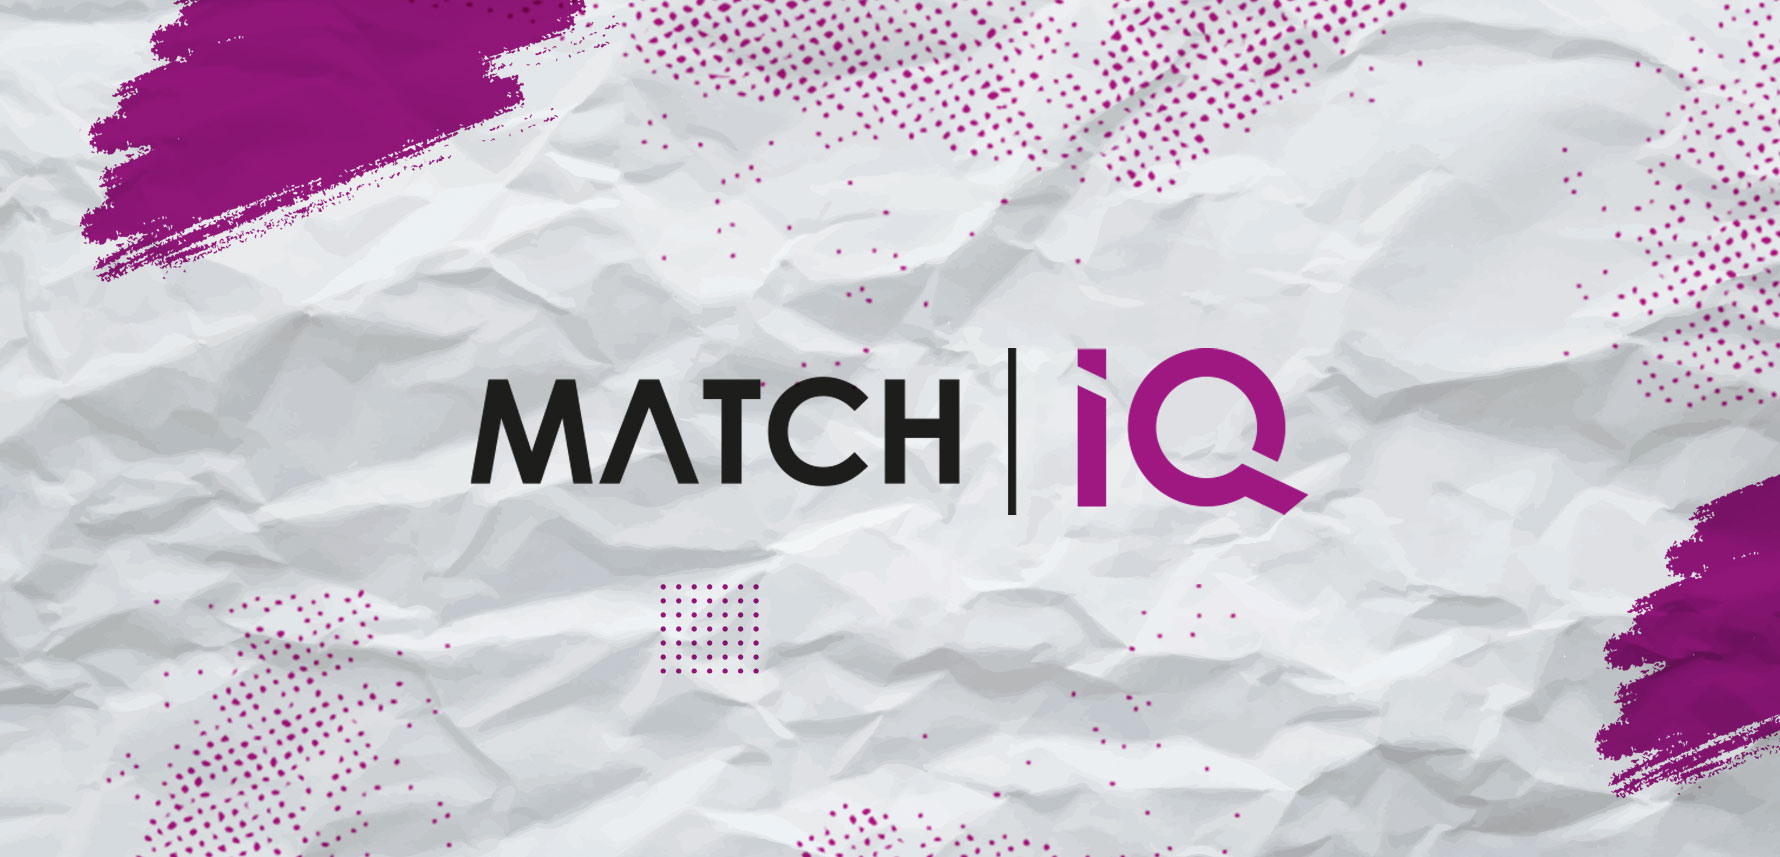 Hüfner Design | Referenz Match IQ | Social Media, Instagram